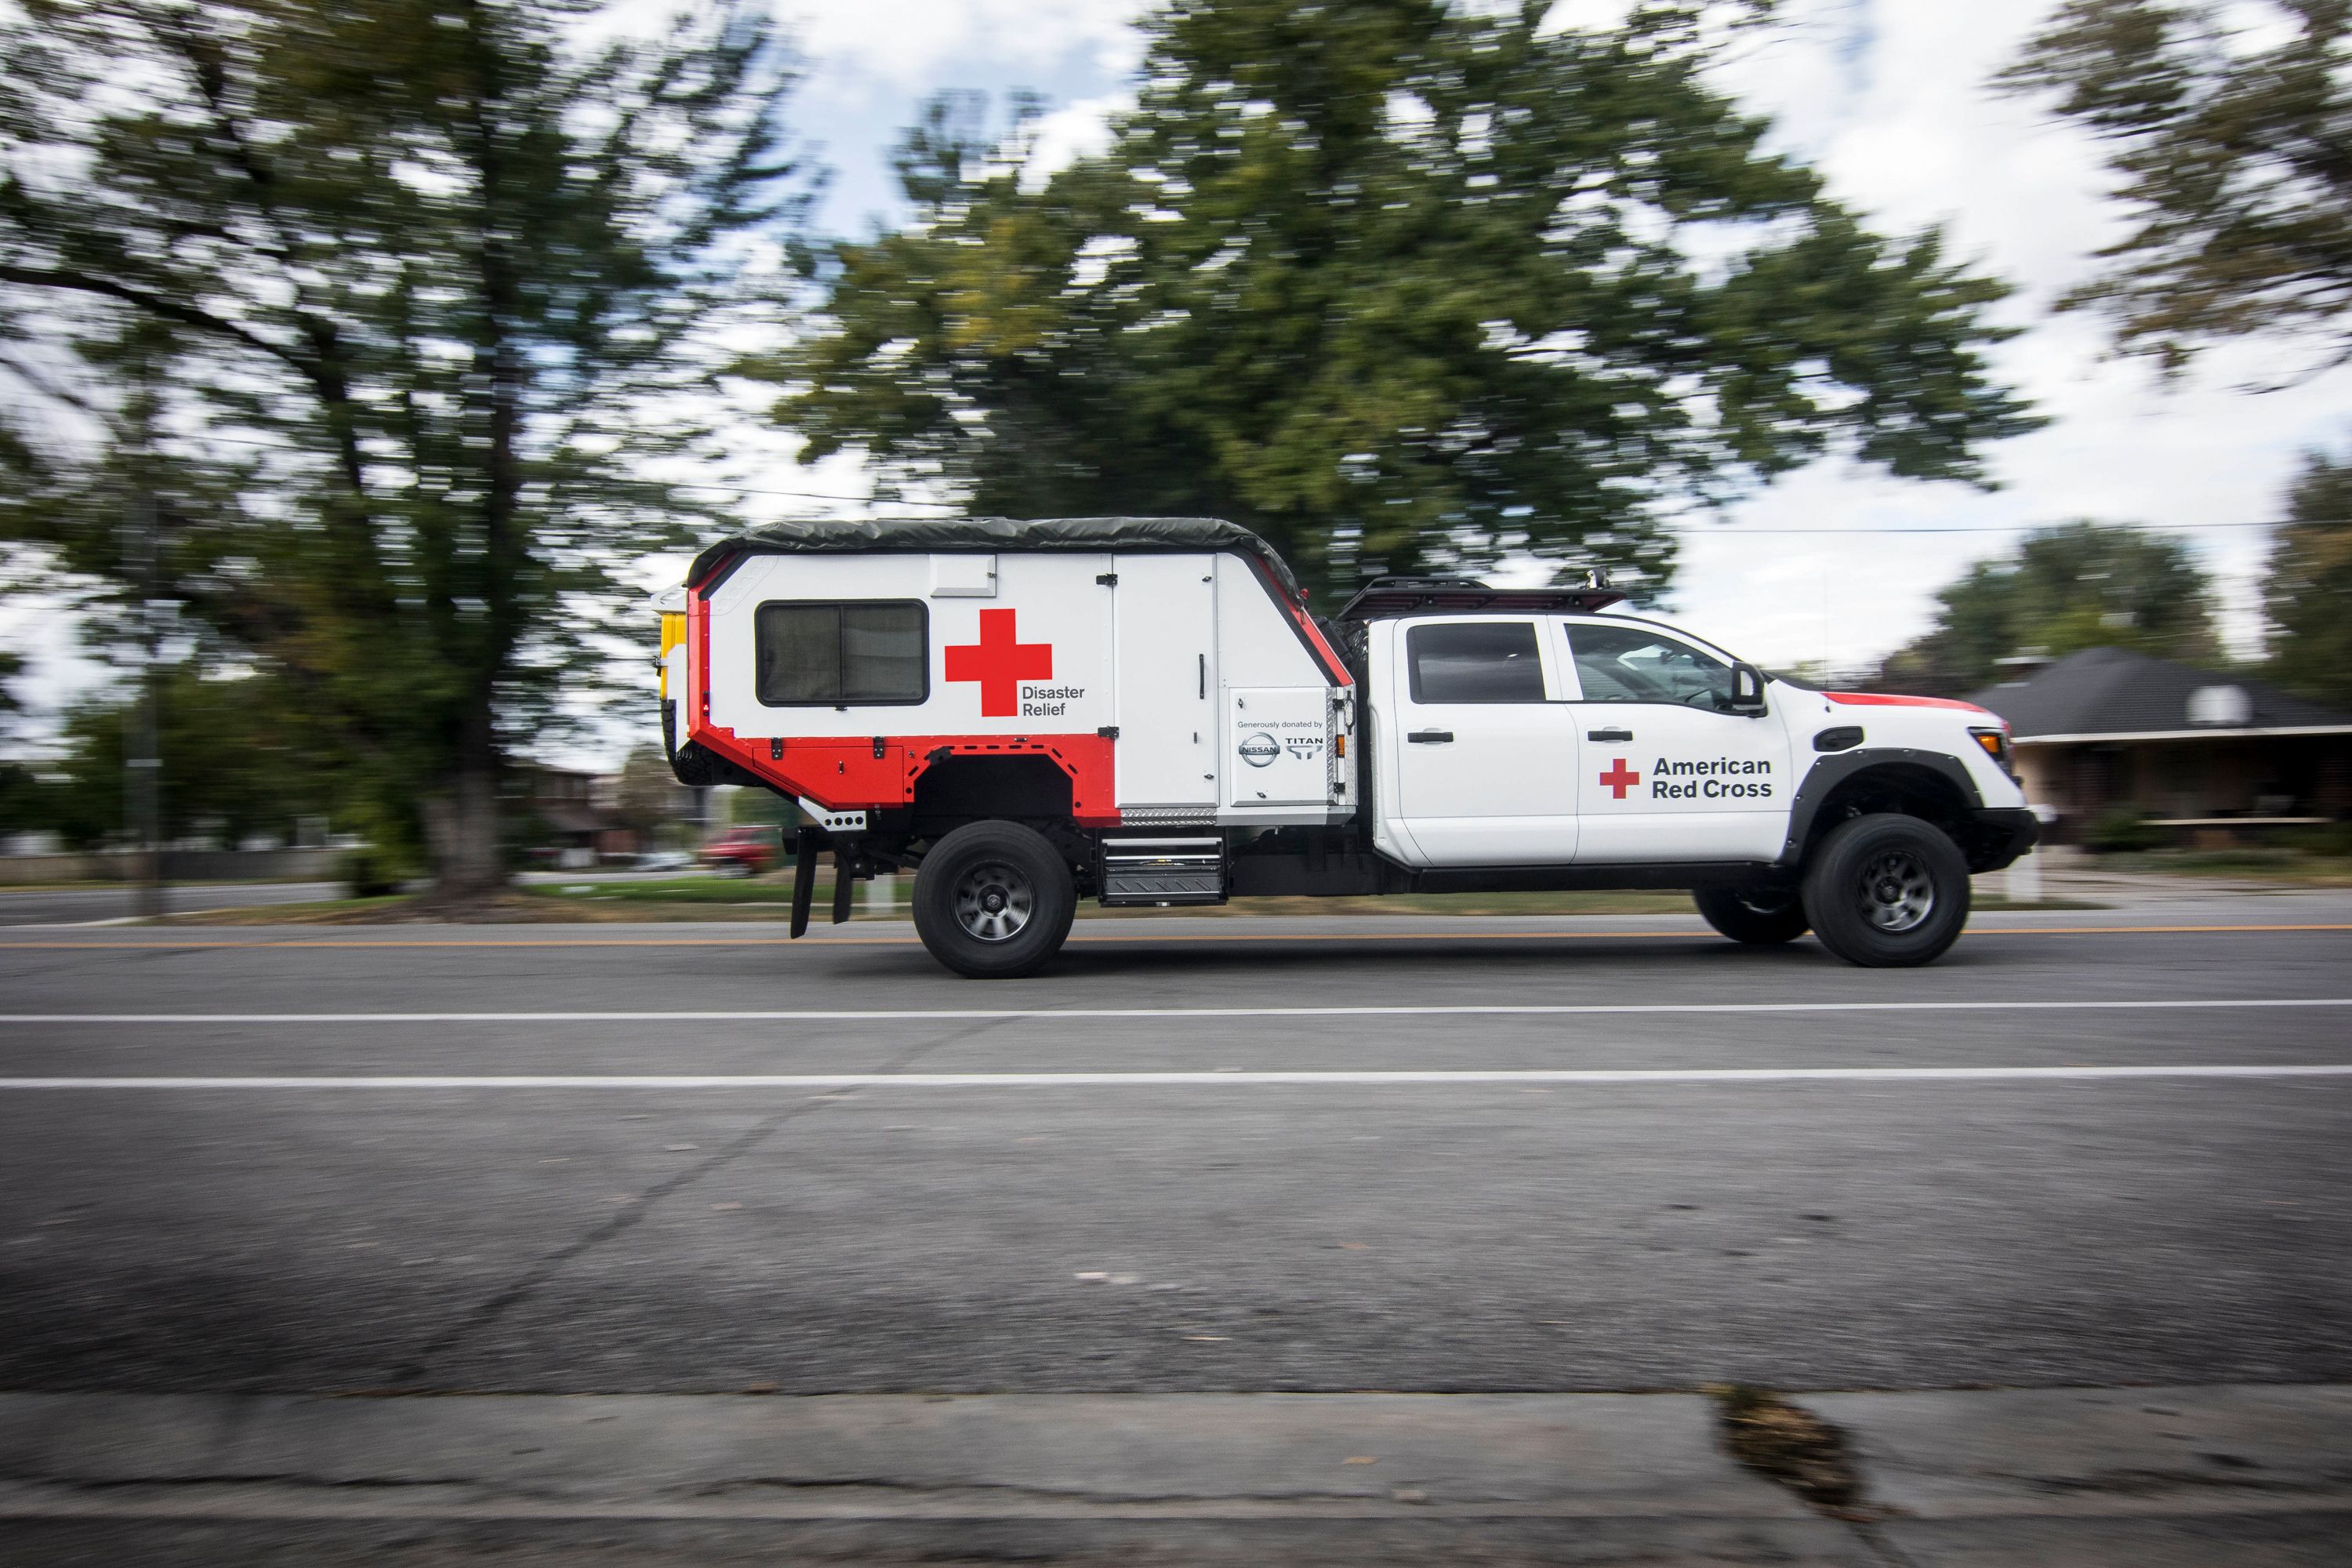 2018 Nissan Red Cross Ultimate Service Titan 